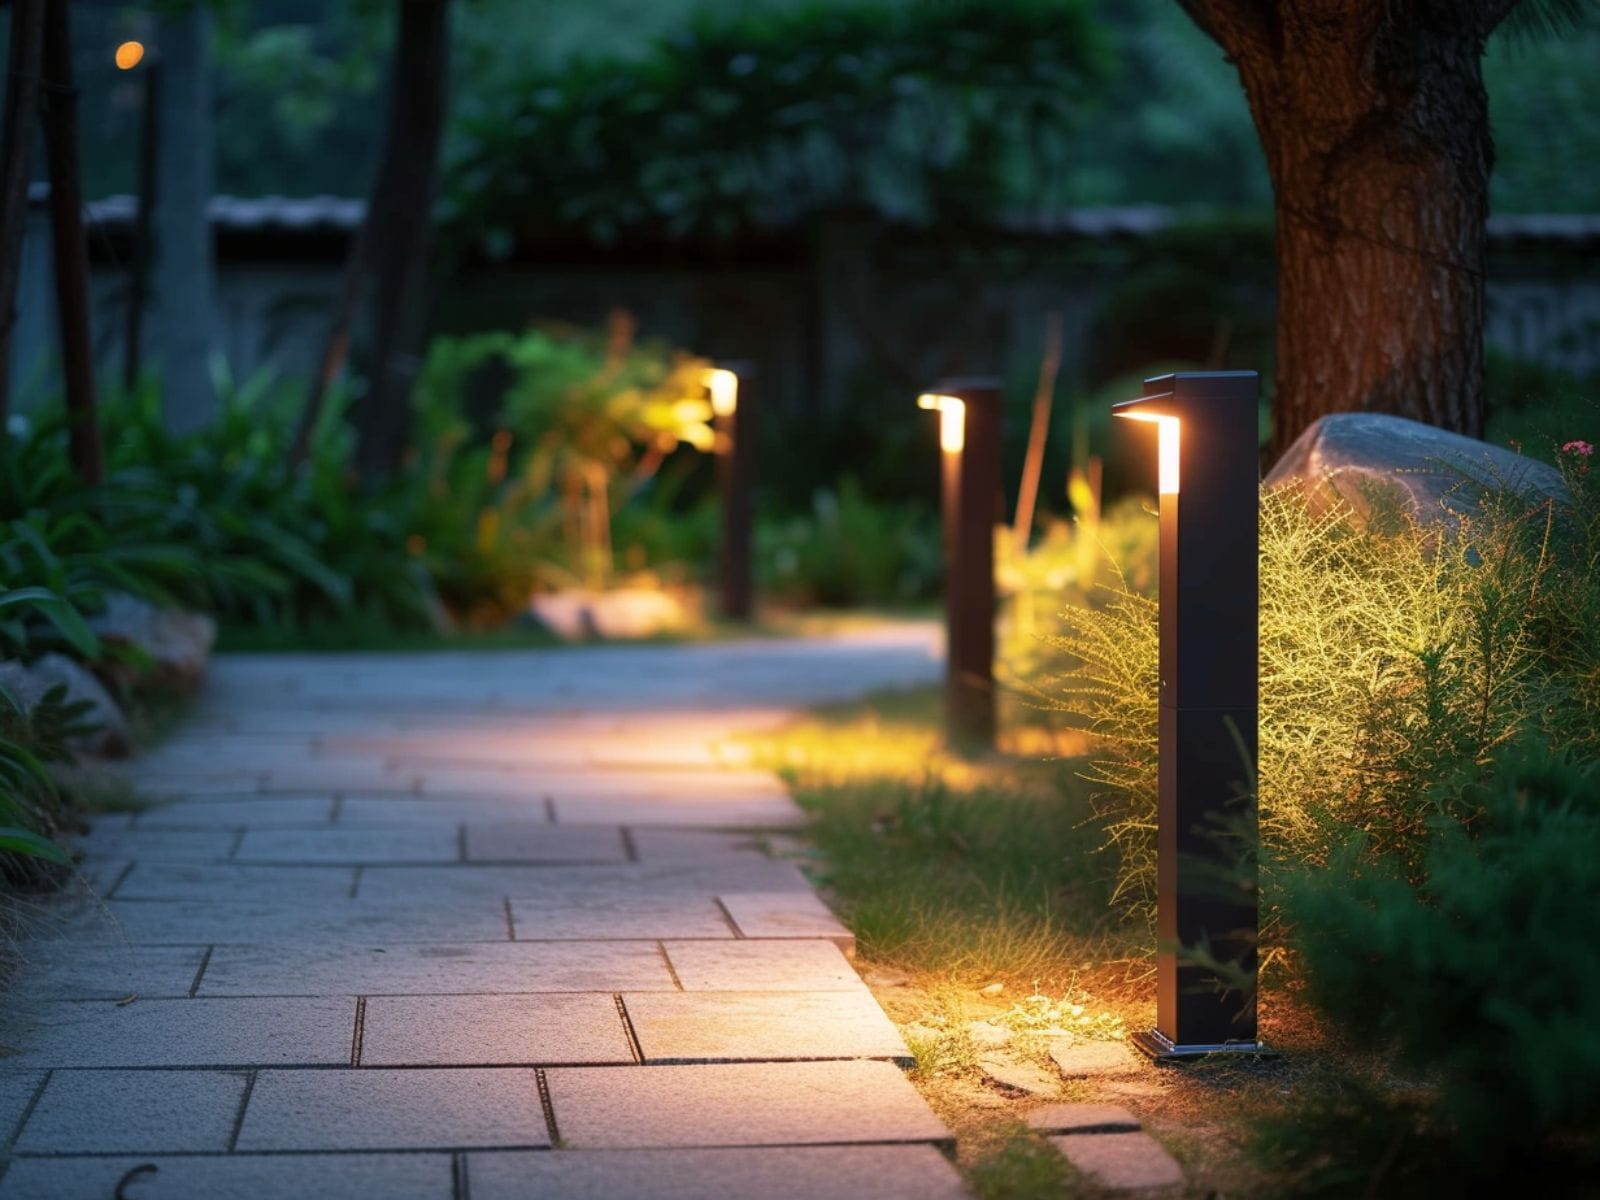 Bollard lights illuminating a garden pathway